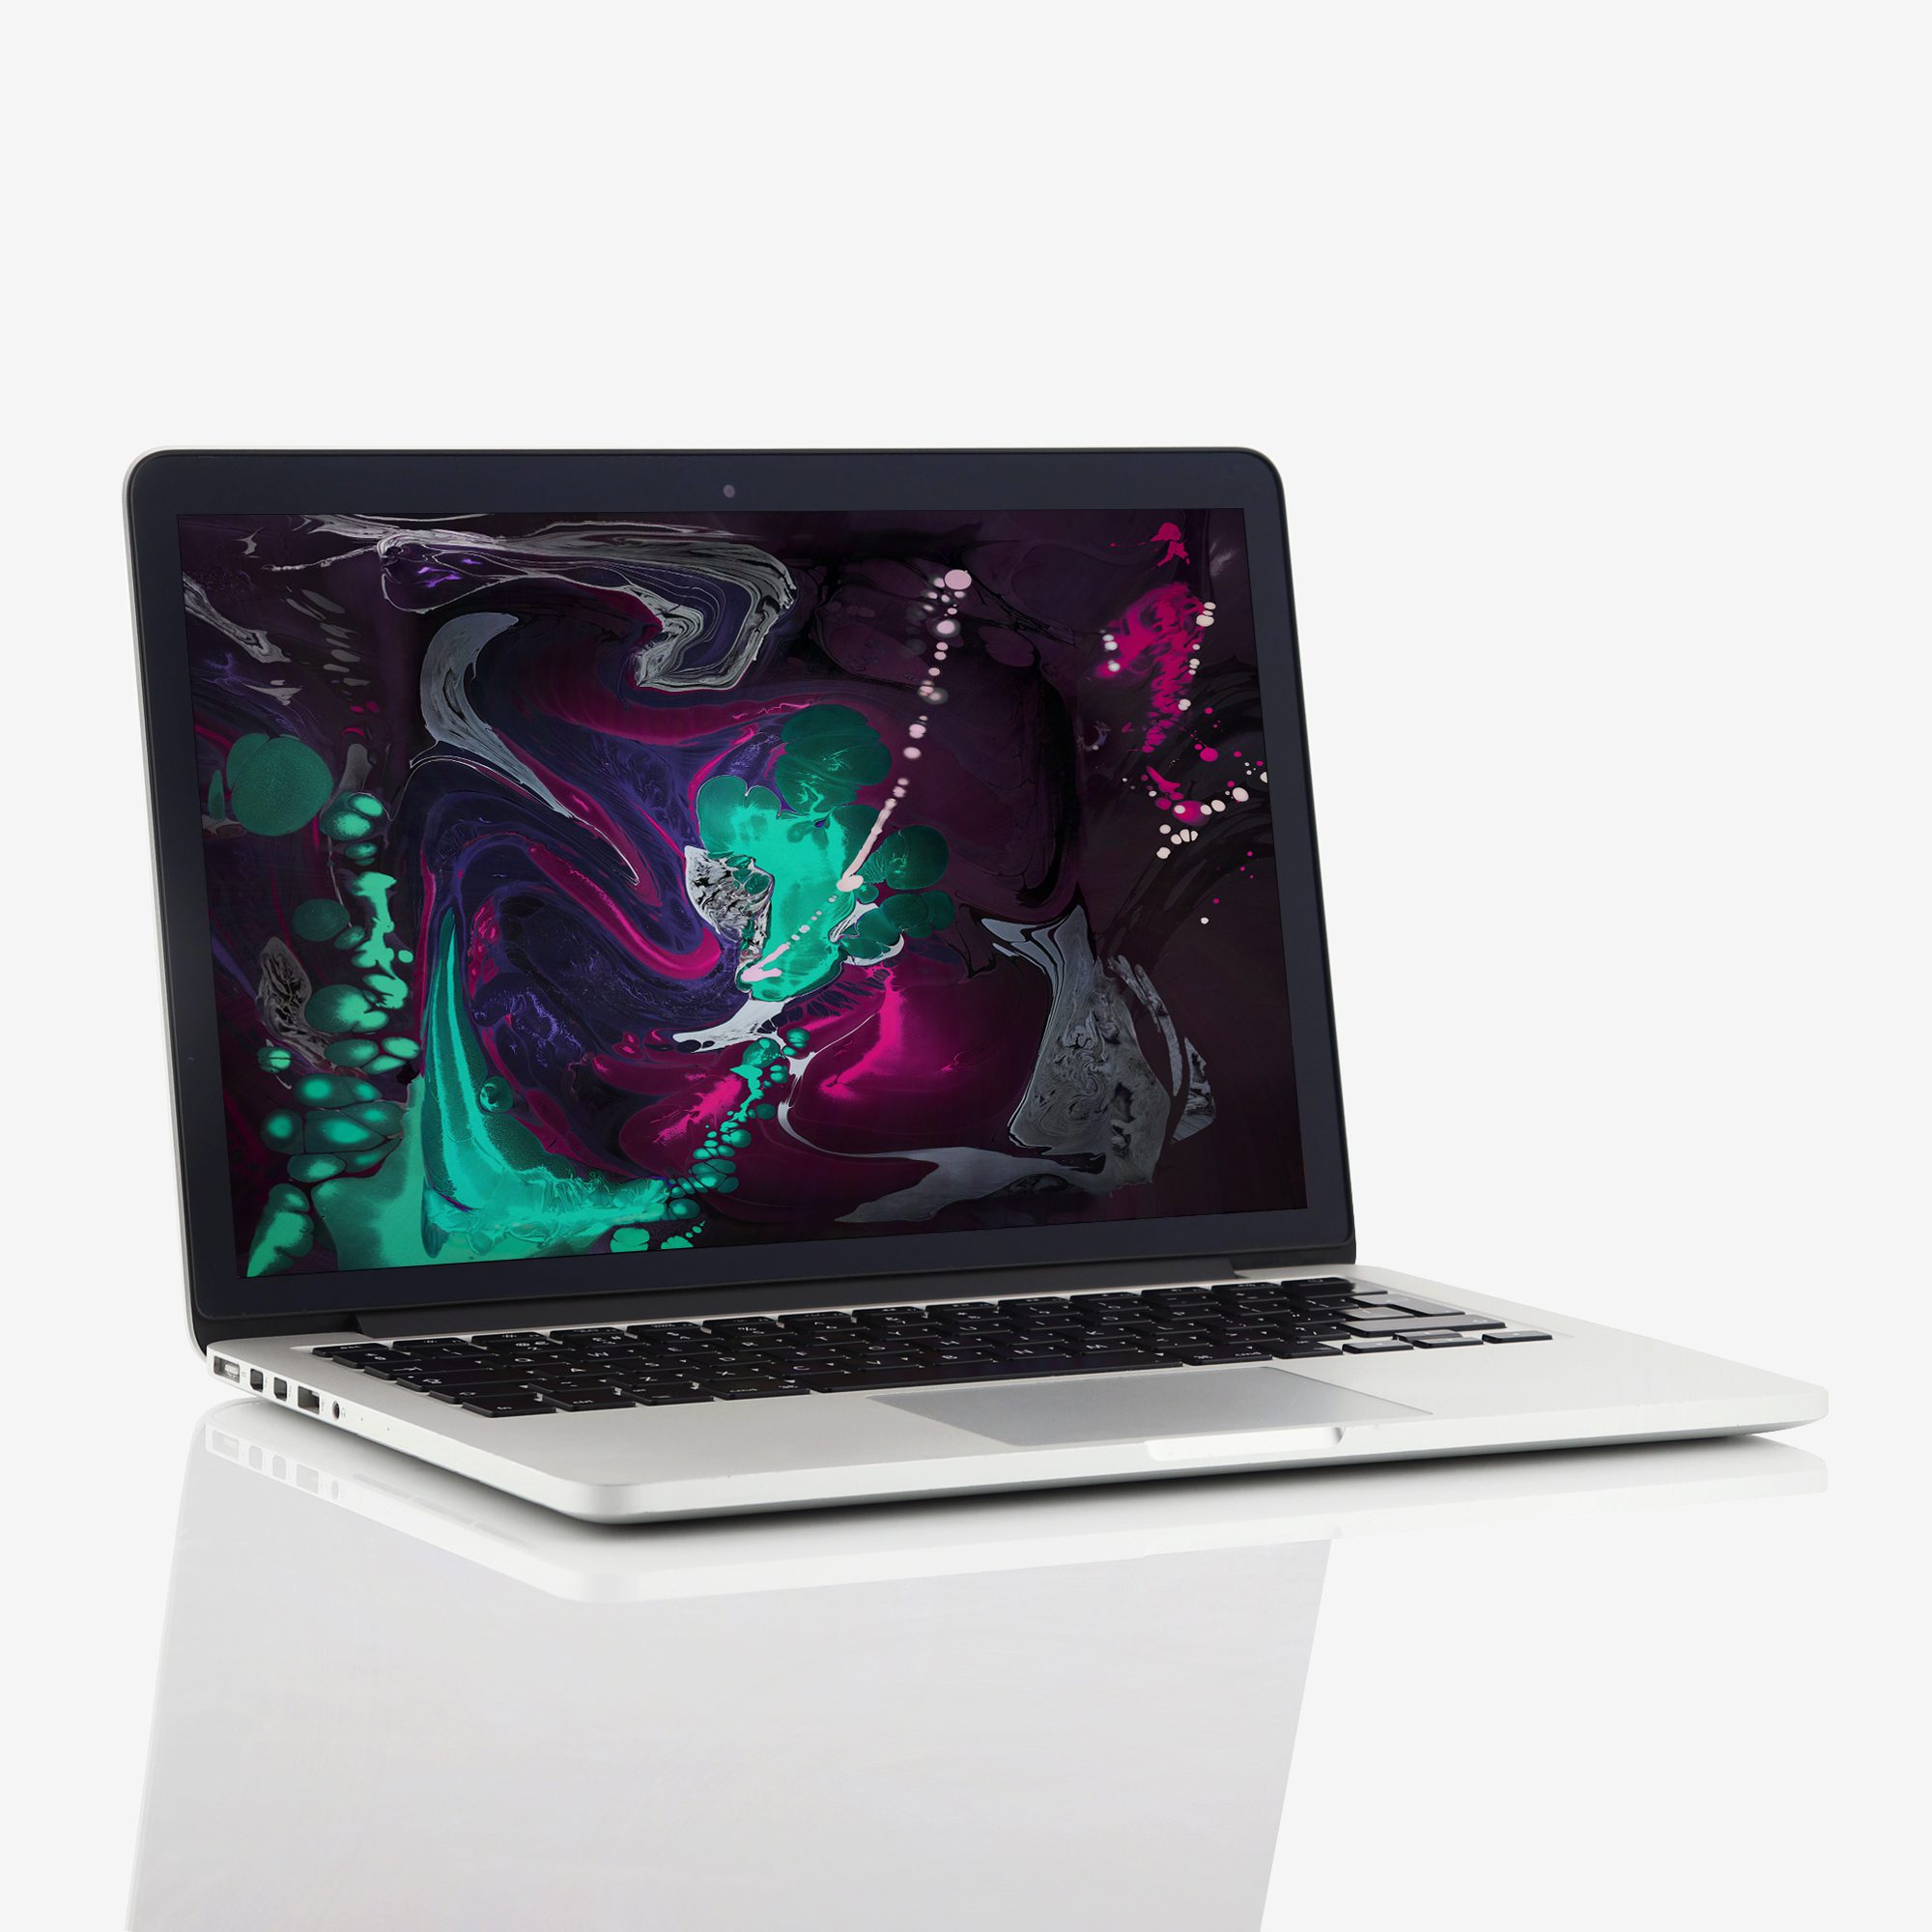 1 x Apple MacBook Pro Retina 13 Inch Dual Core i5 2.70 GHz (2015)